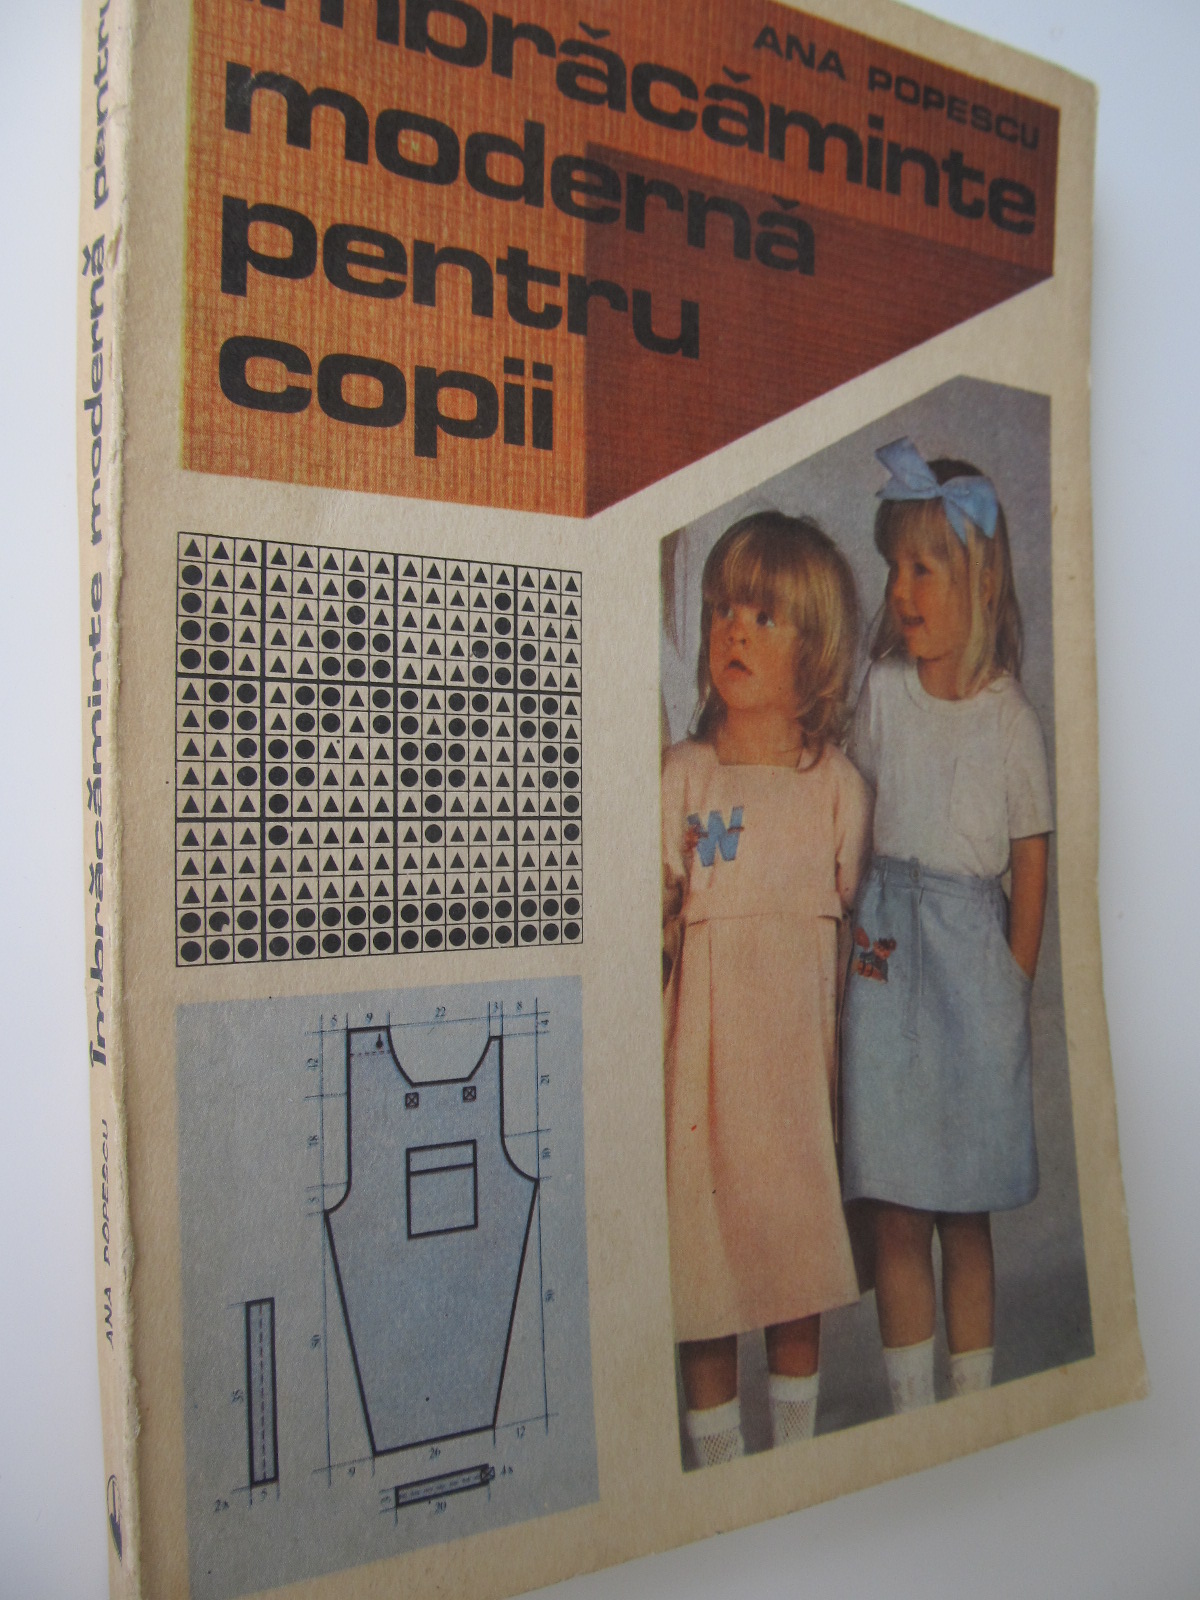 Imbracaminte moderna pentru copii - Ana Popescu | Detalii carte